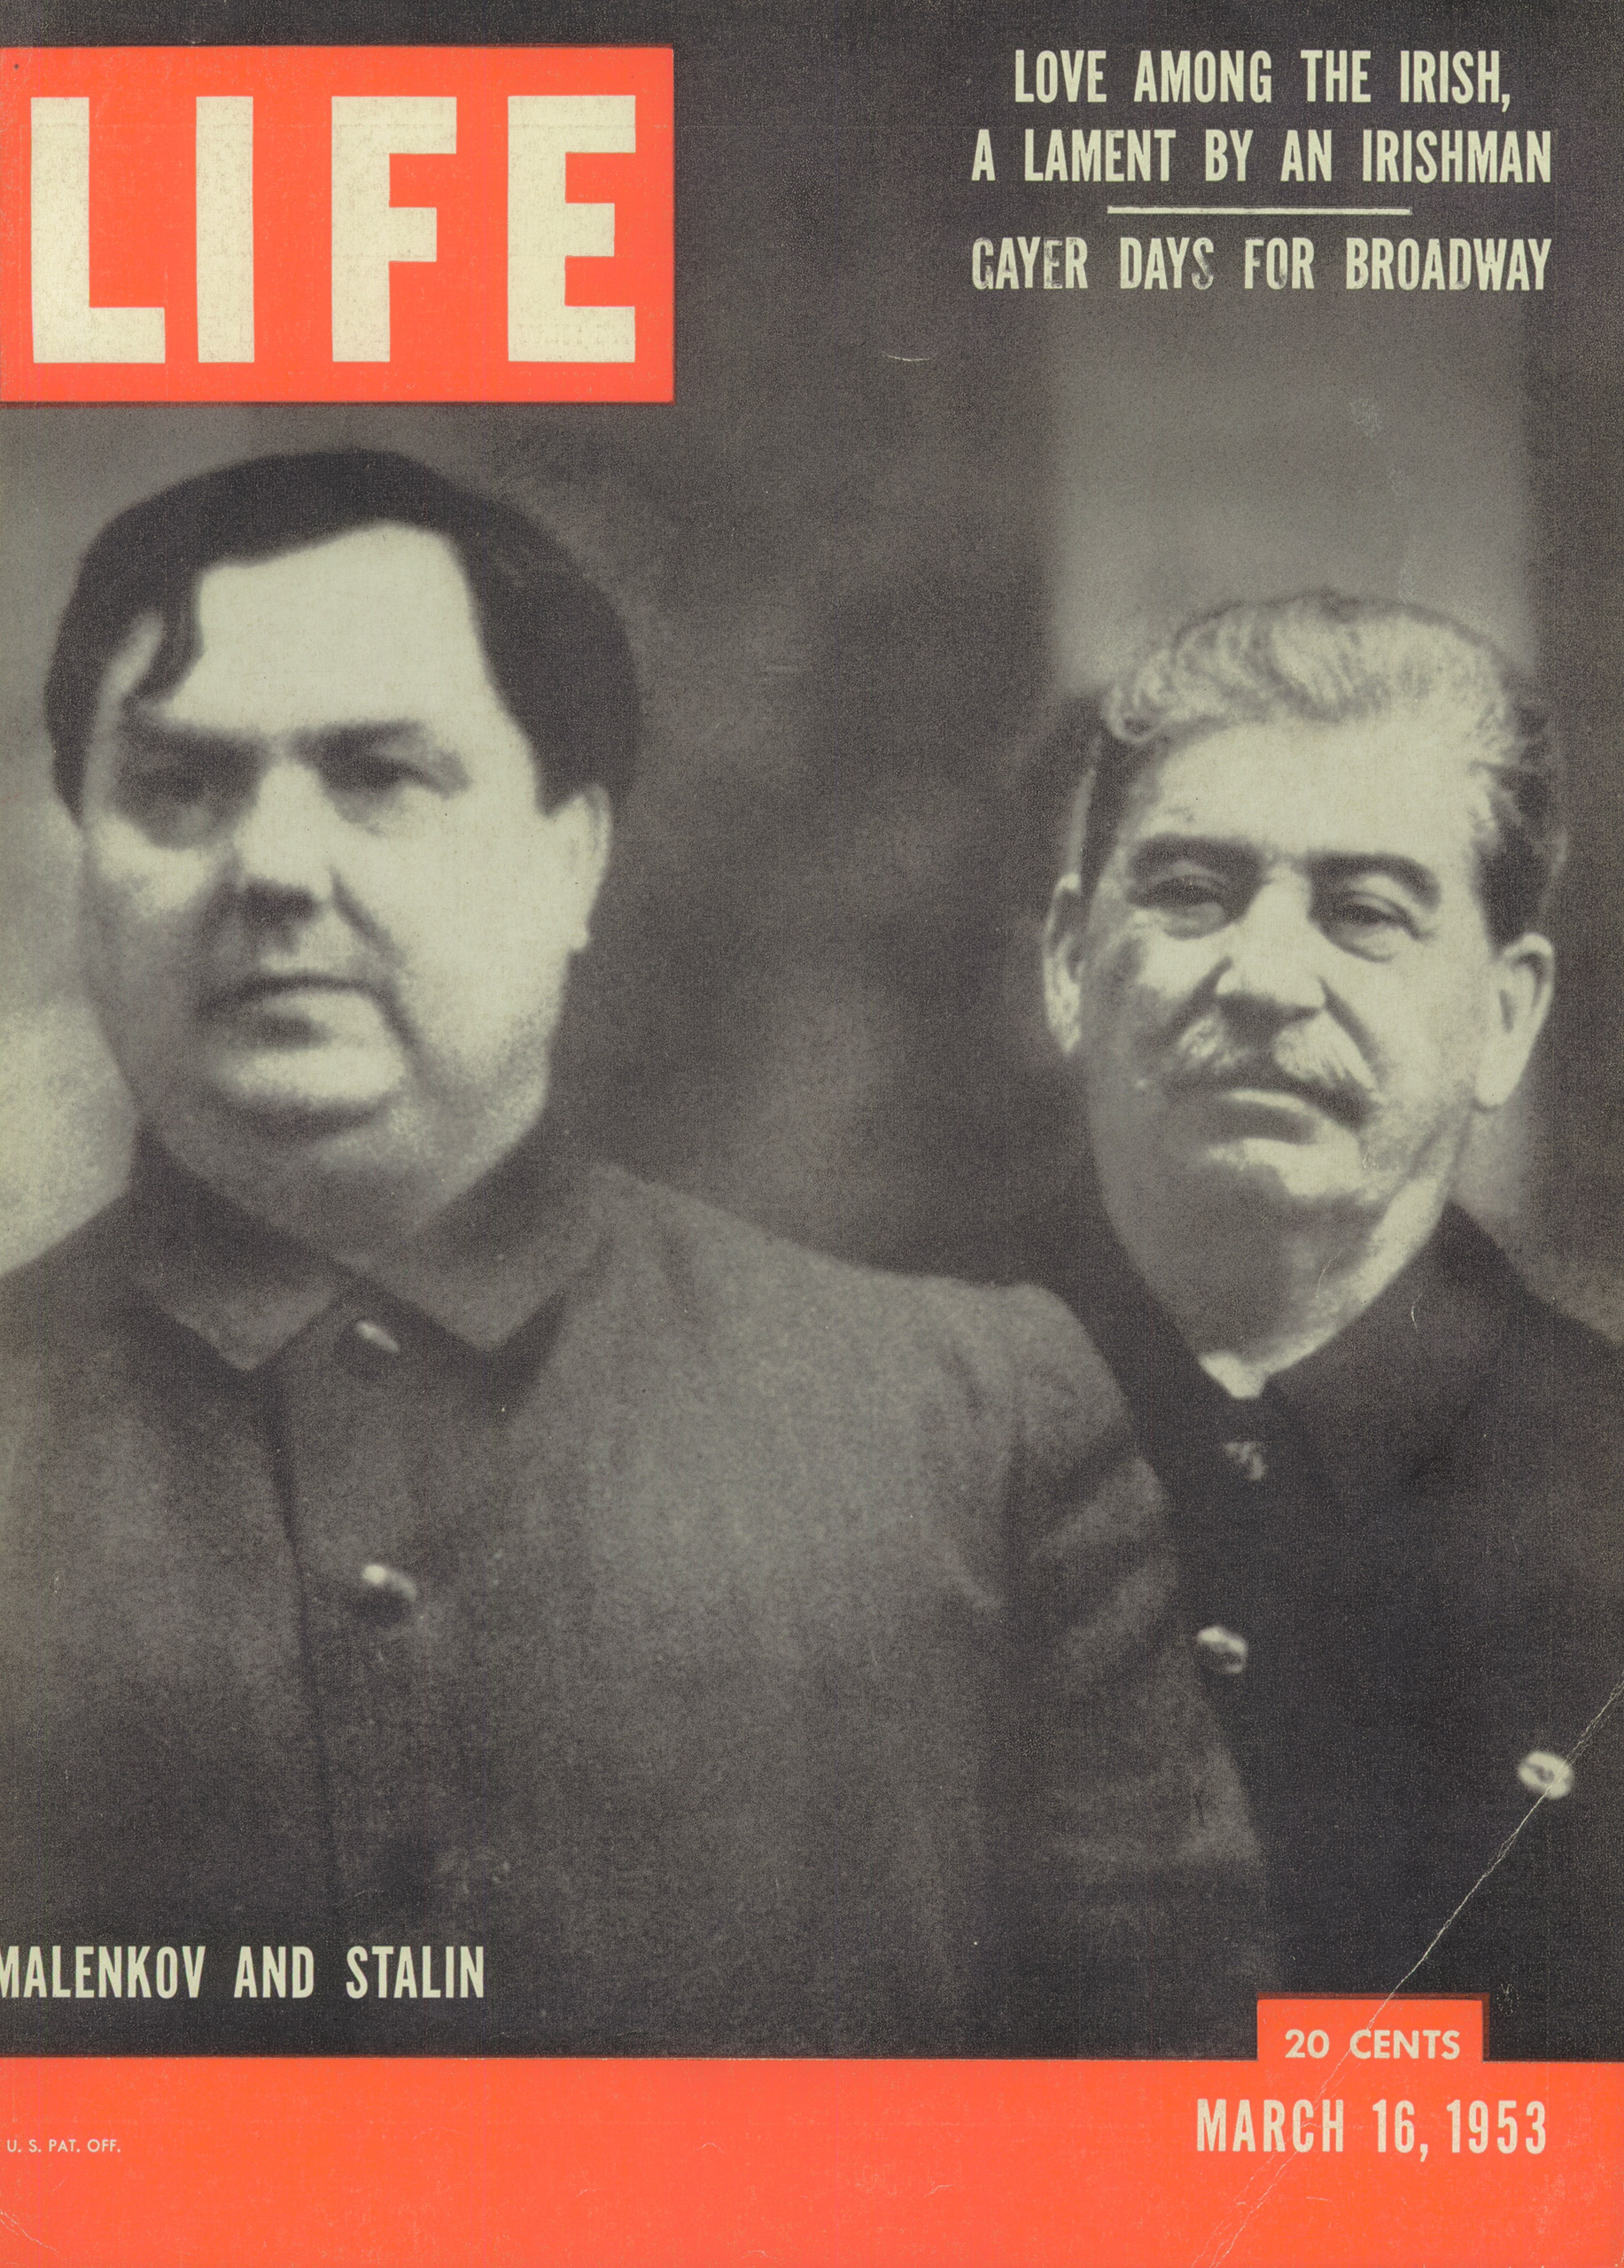 Mar. 16, 1953 cover of LIFE magazine.